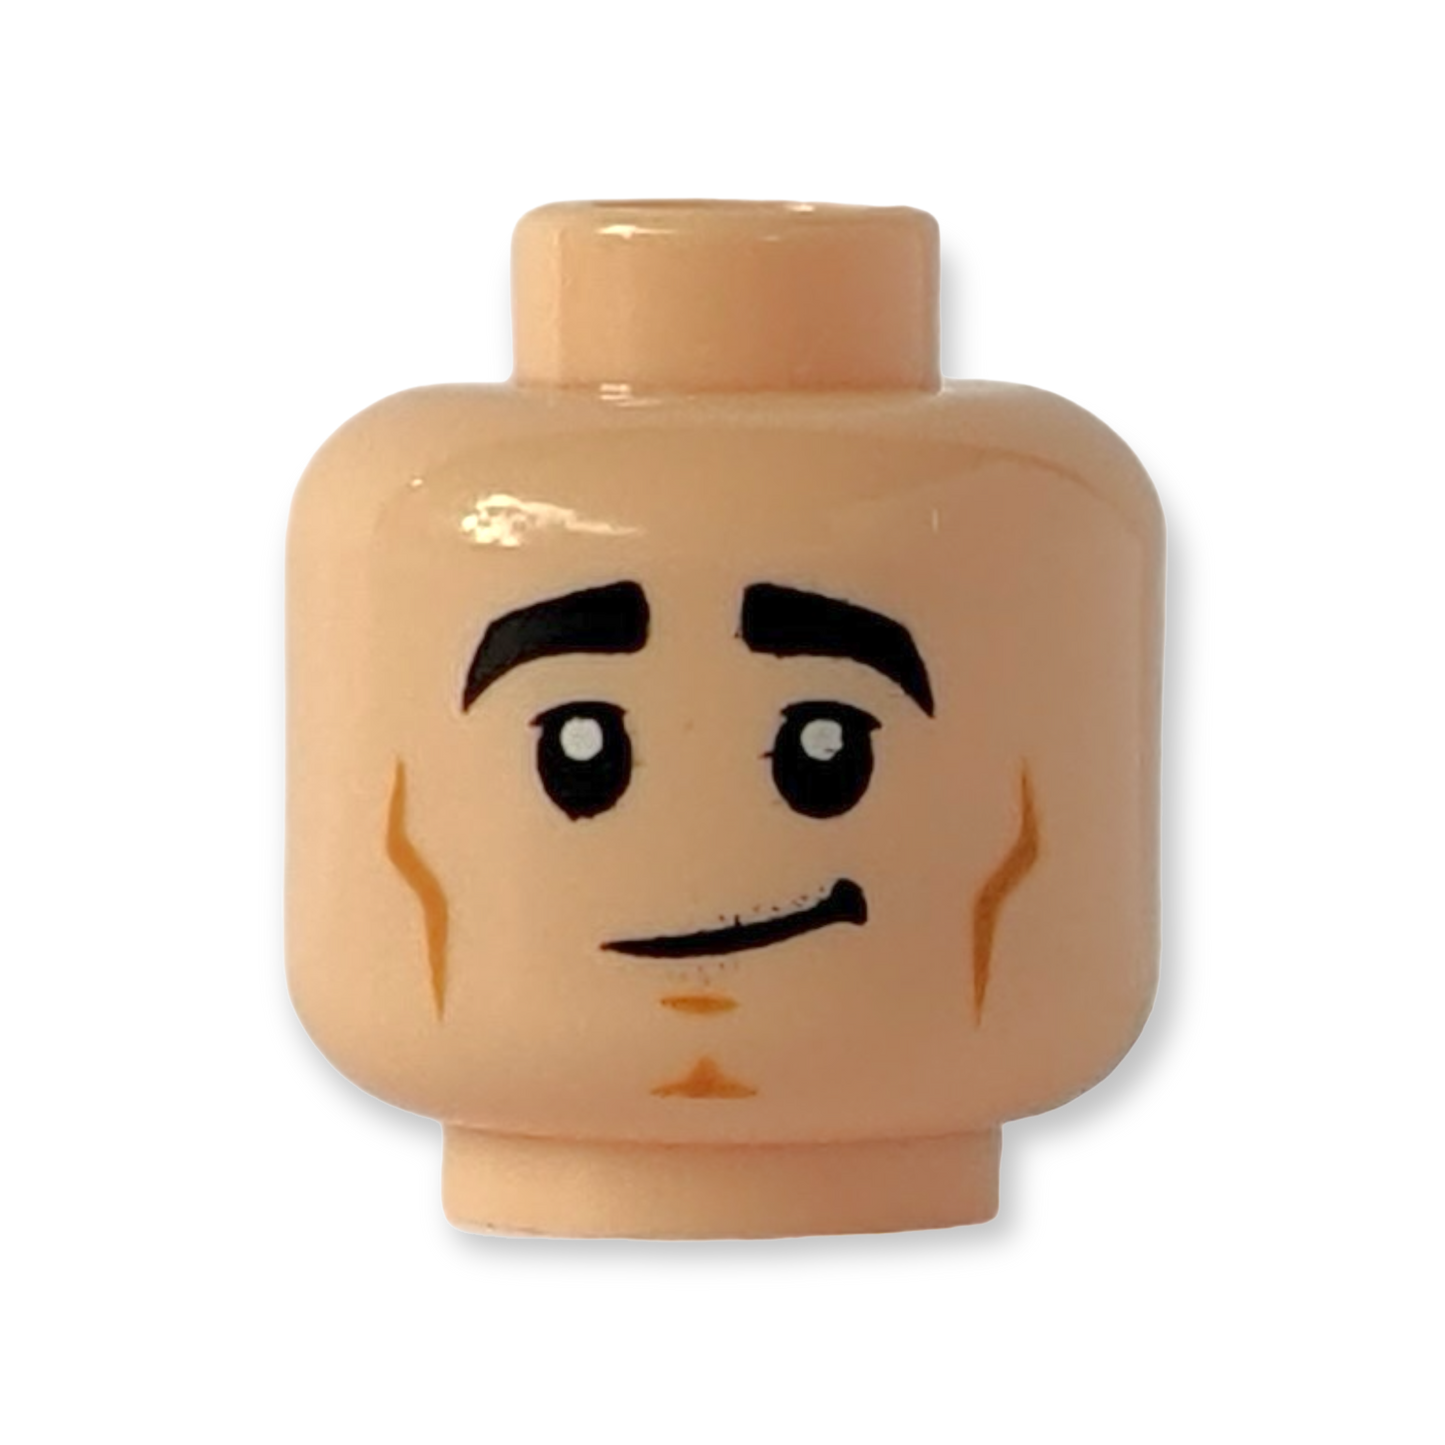 LEGO Head - 3464 Dicke schwarze Augenbrauen dunkelorange Wangenlinien und Grübchen am Kinn